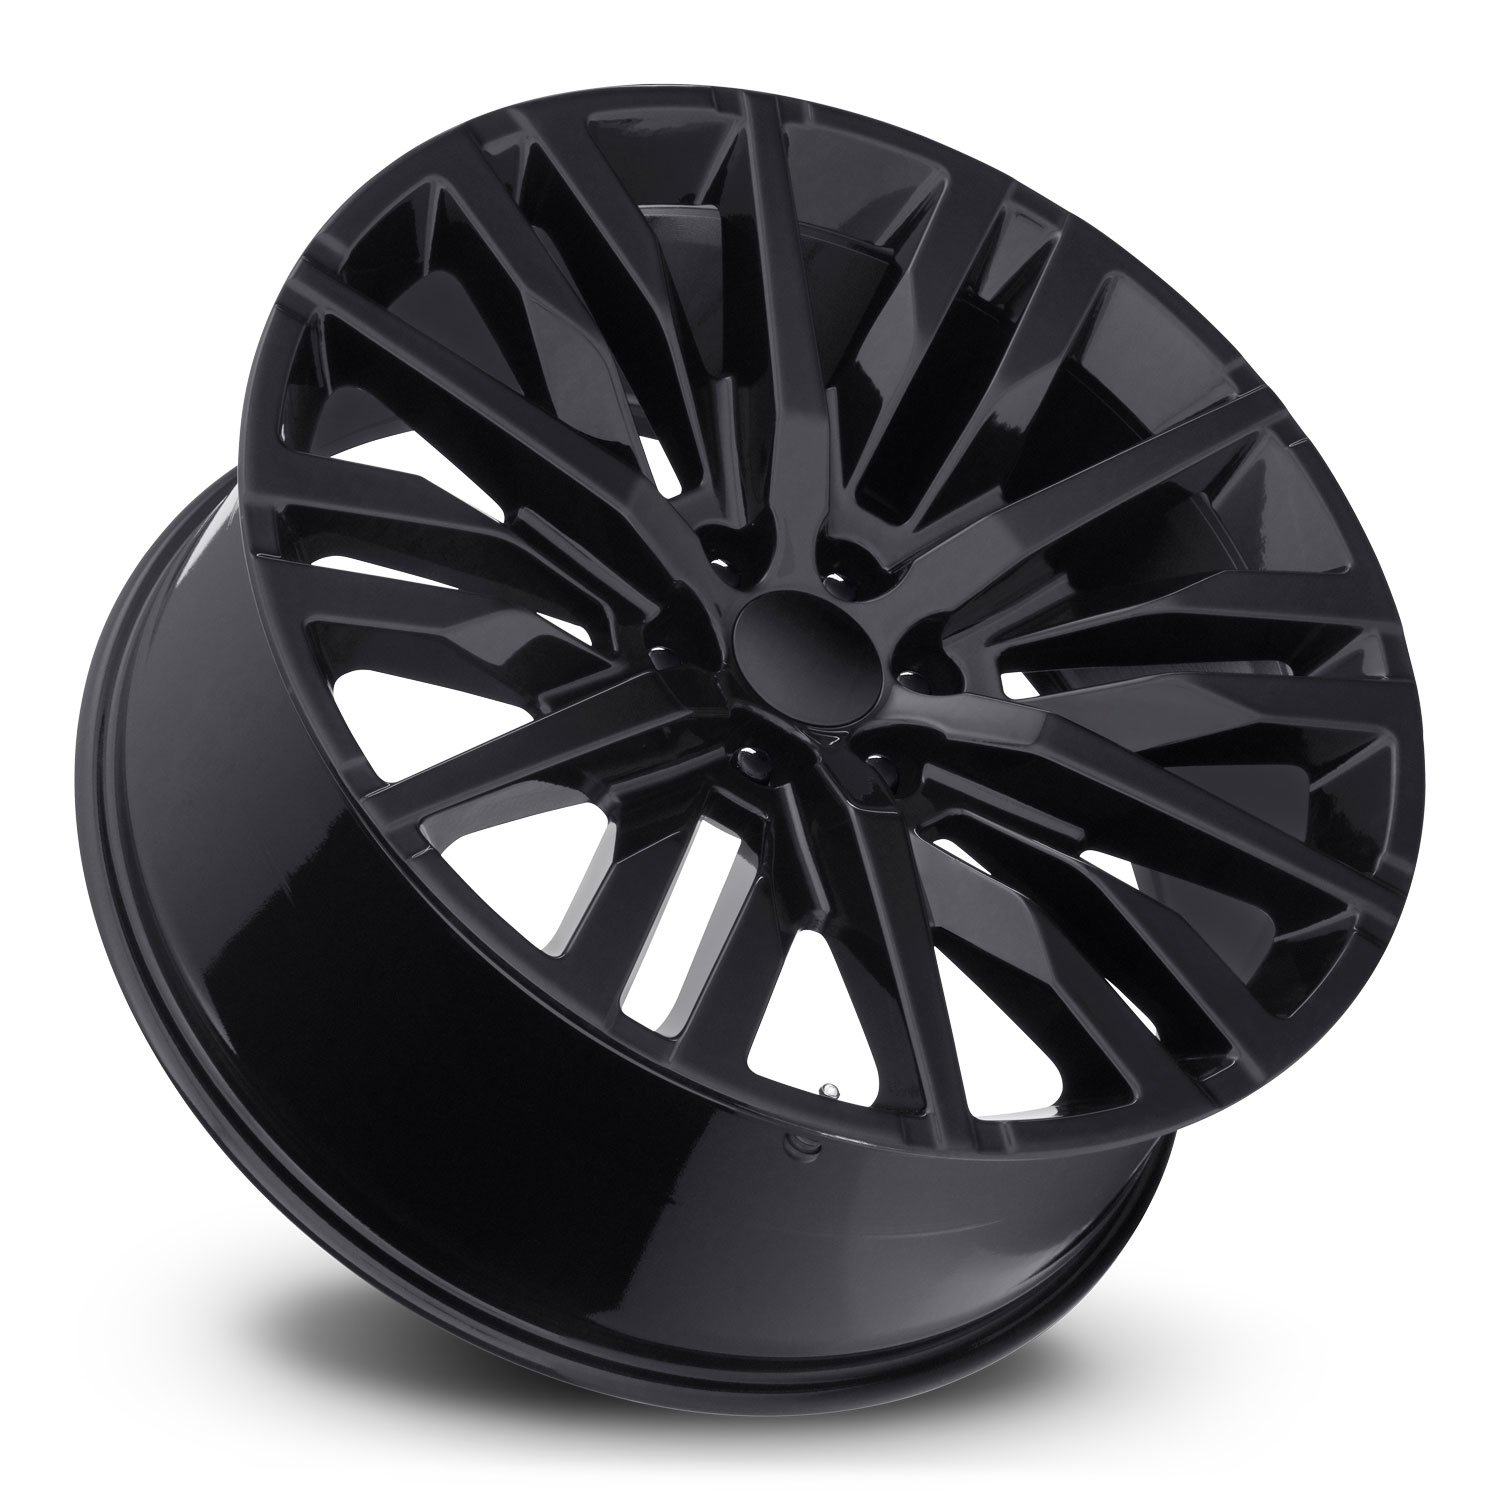 FR97-2410-Gloss-Black-02-GMC-Split-6-spoke-factory-reproductions-wheels-rims-lay-1500